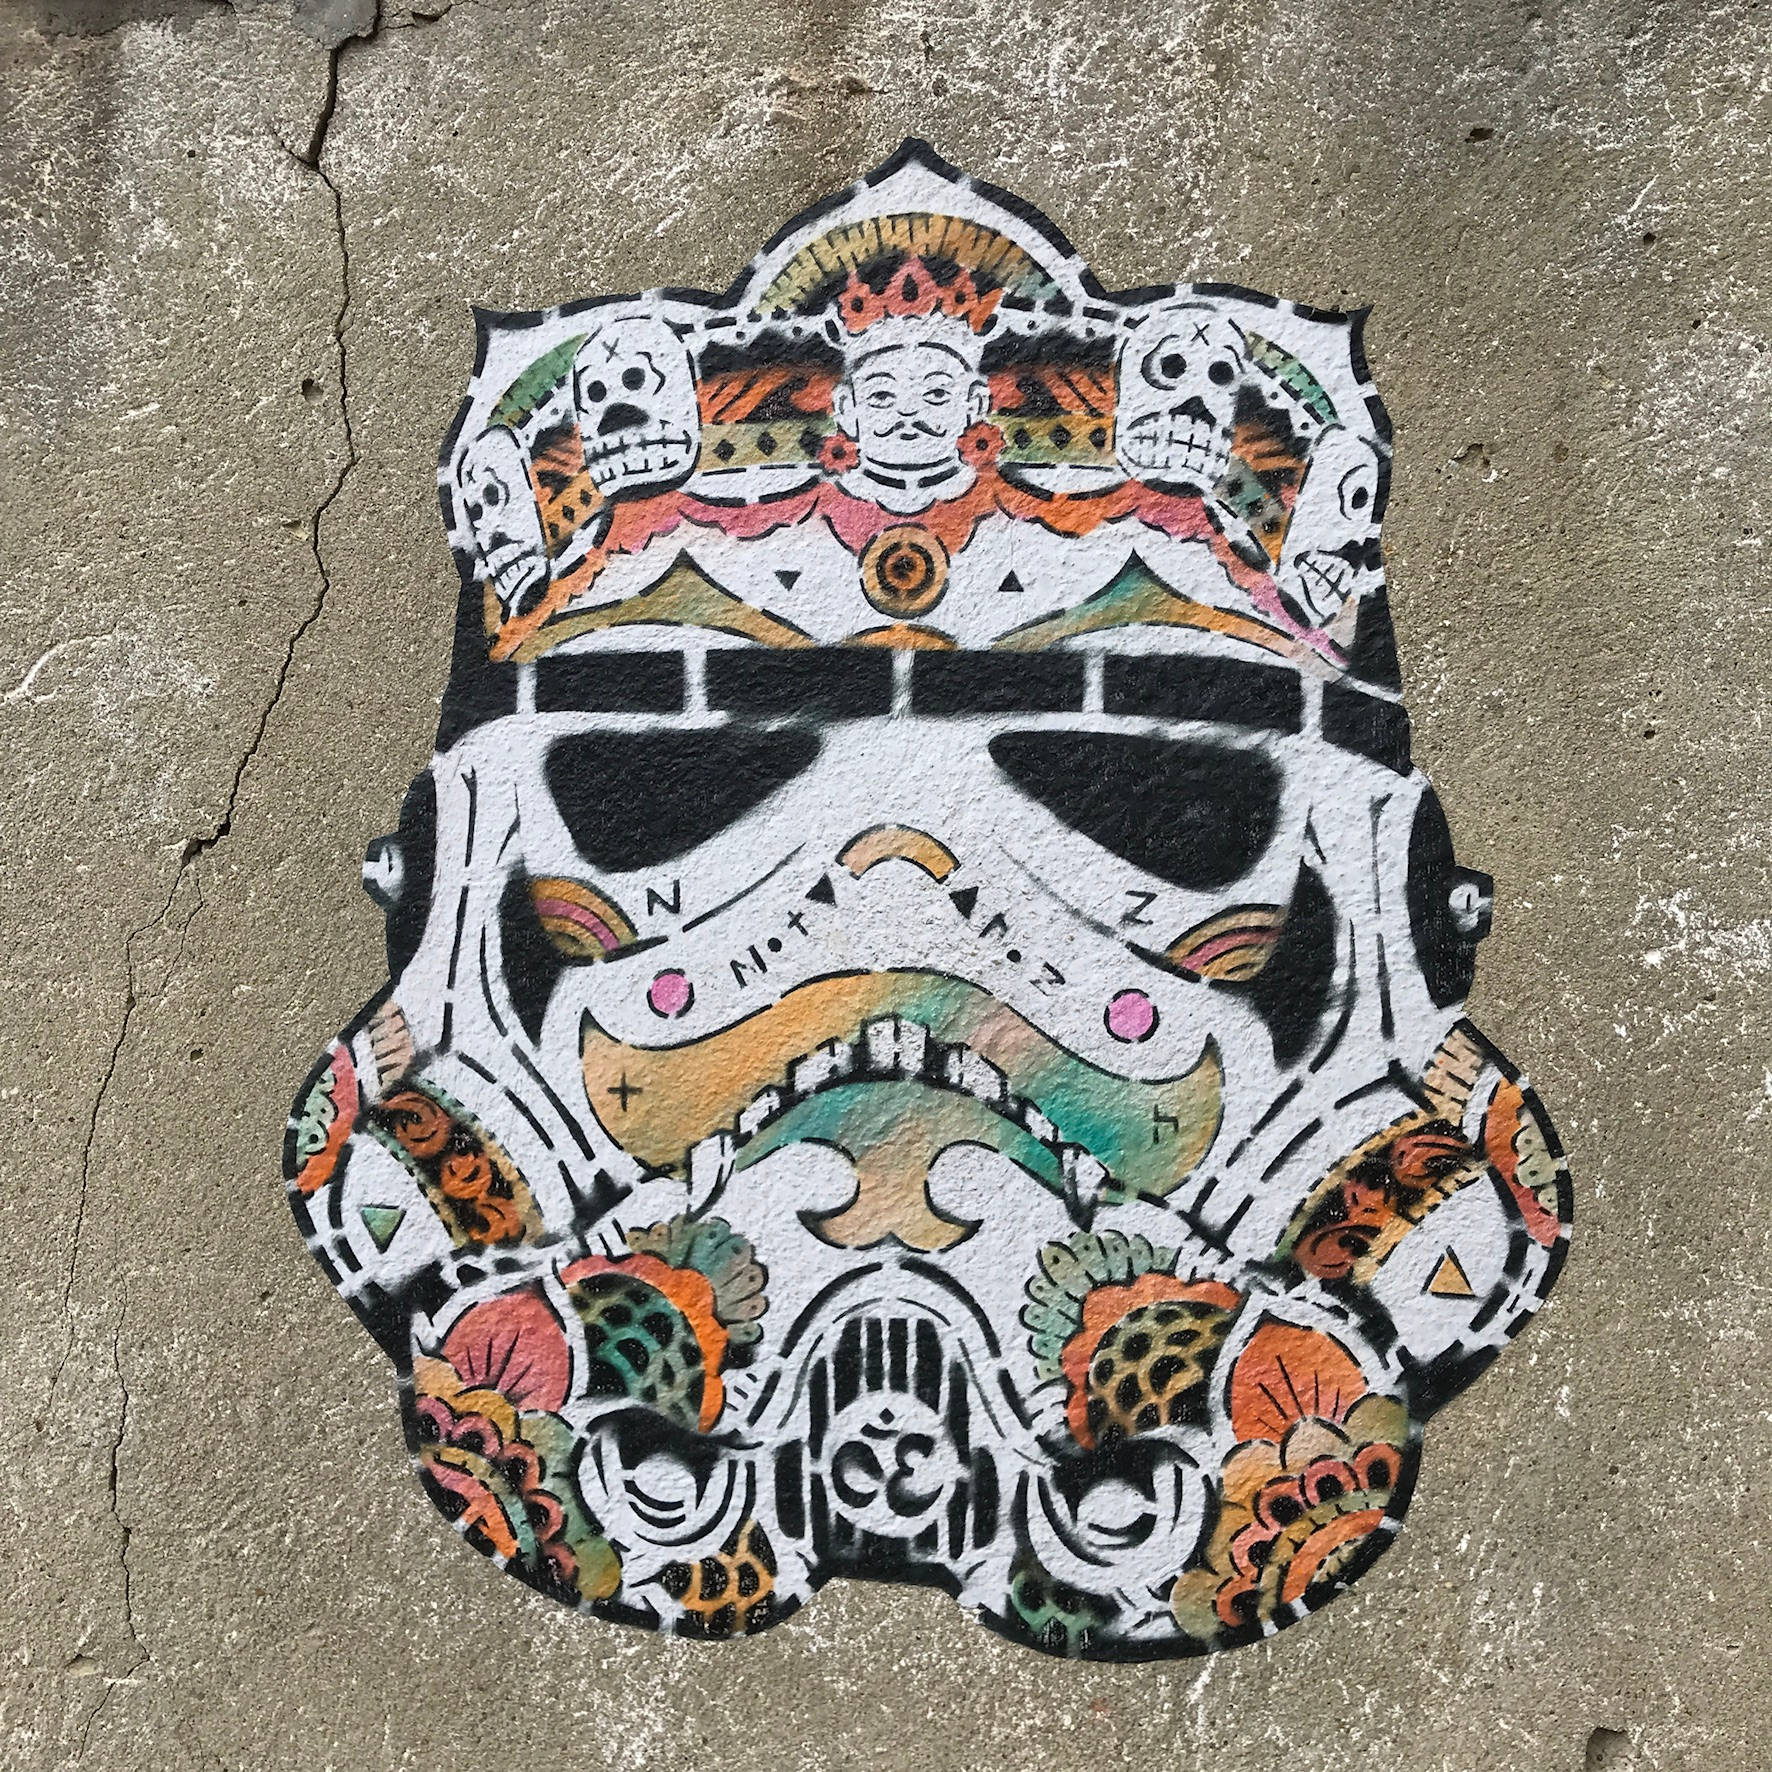 Star Wars Stormtrooper Wall Mural